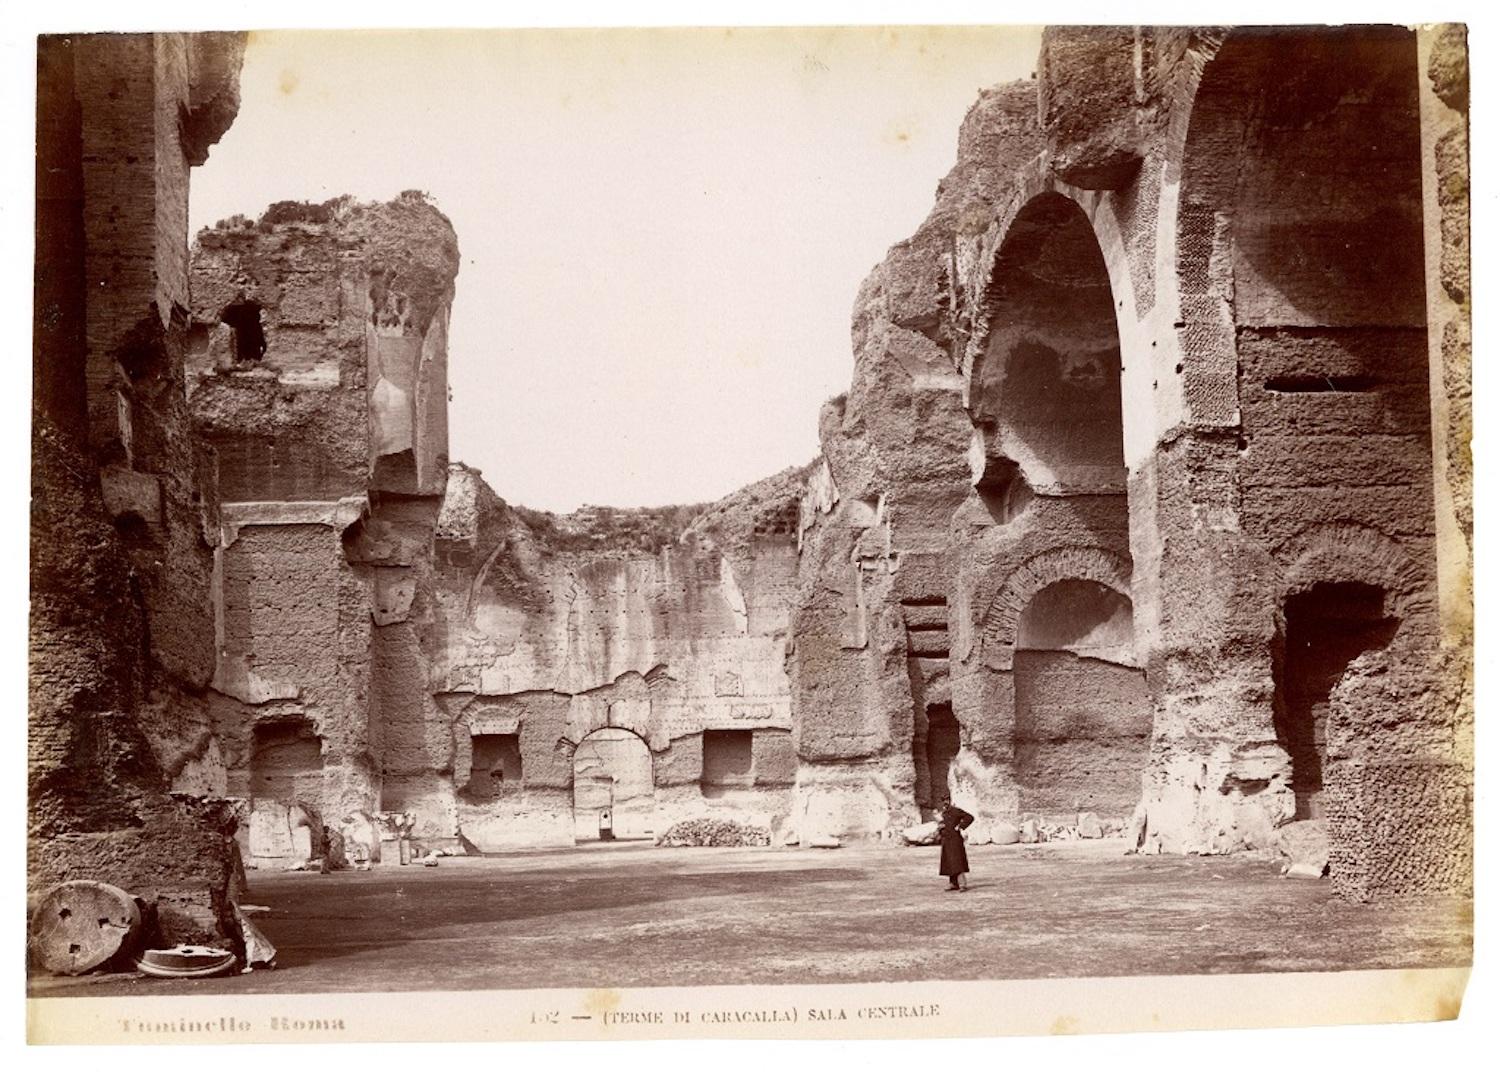 Lodovico Tuminello Landscape Photograph - View of the Caracalla's Baths - Vintage Photo 1880/1890